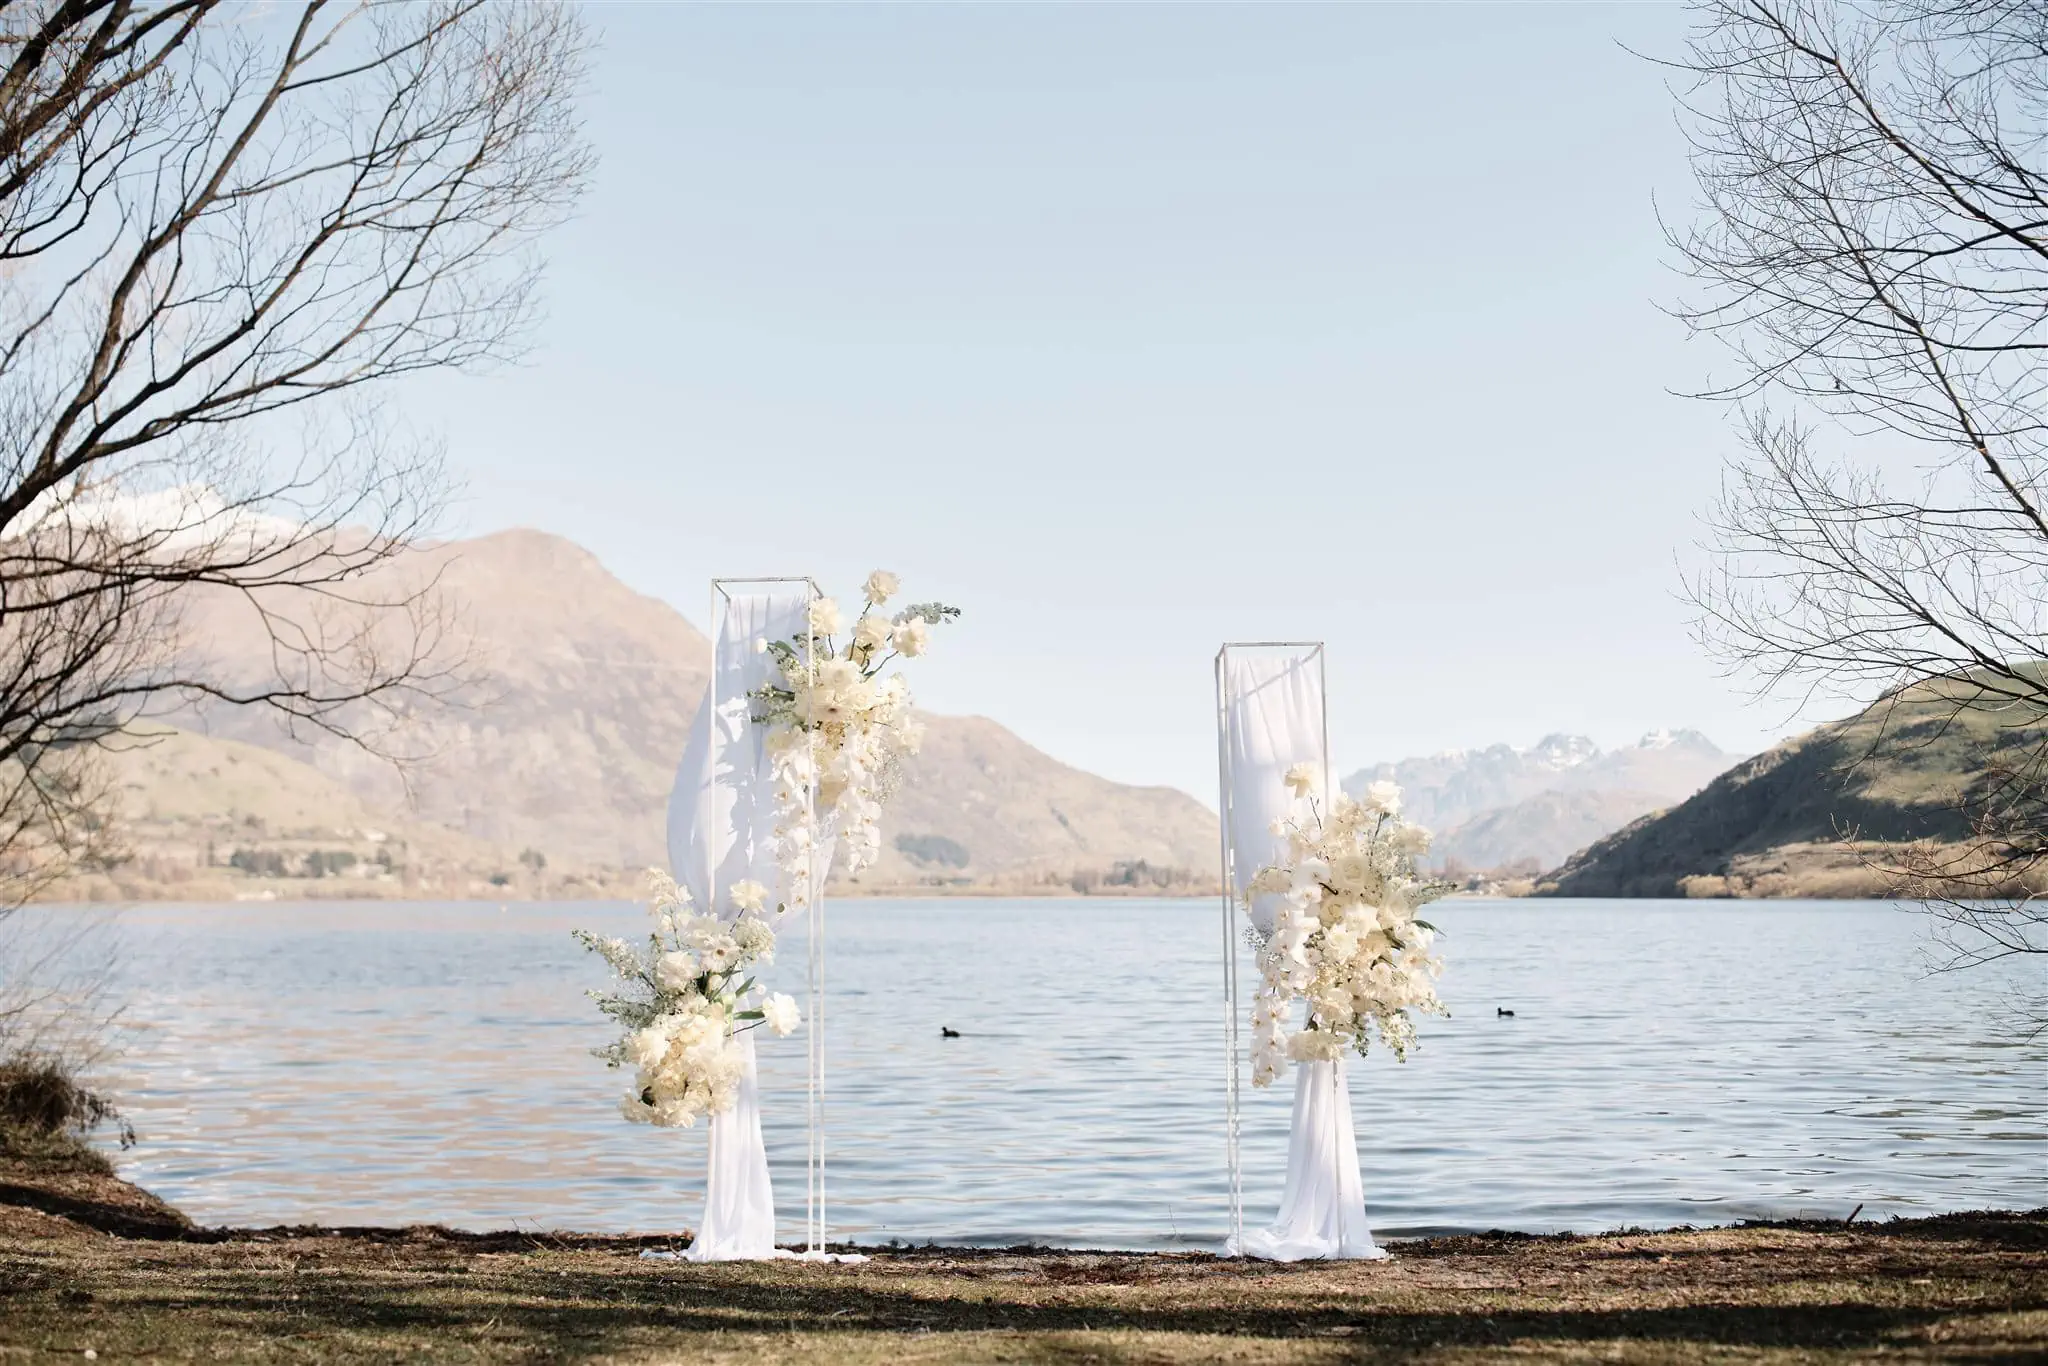 Queenstown New Zealand Elopement Wedding Photographer - A queenstown wedding ceremony in front of a lake in New Zealand.